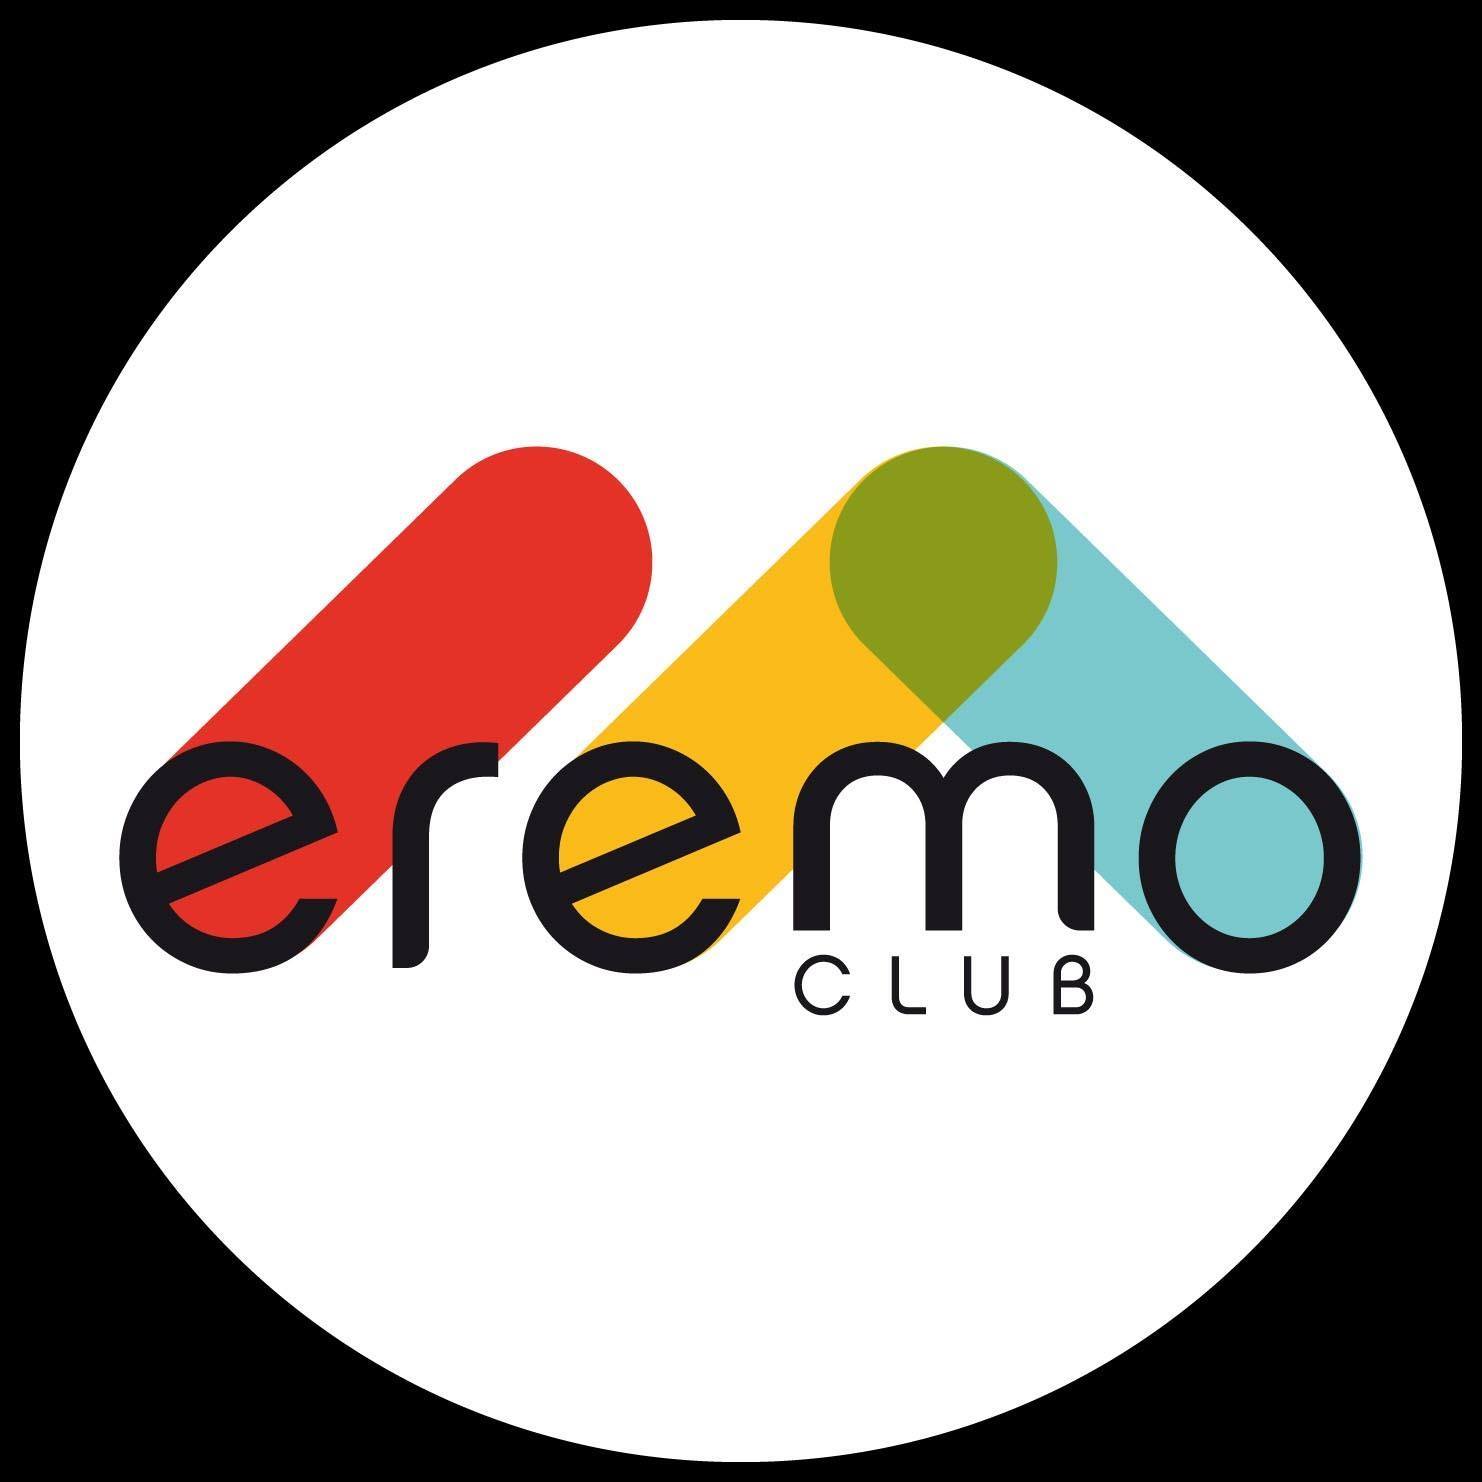 Billets Eremo Club